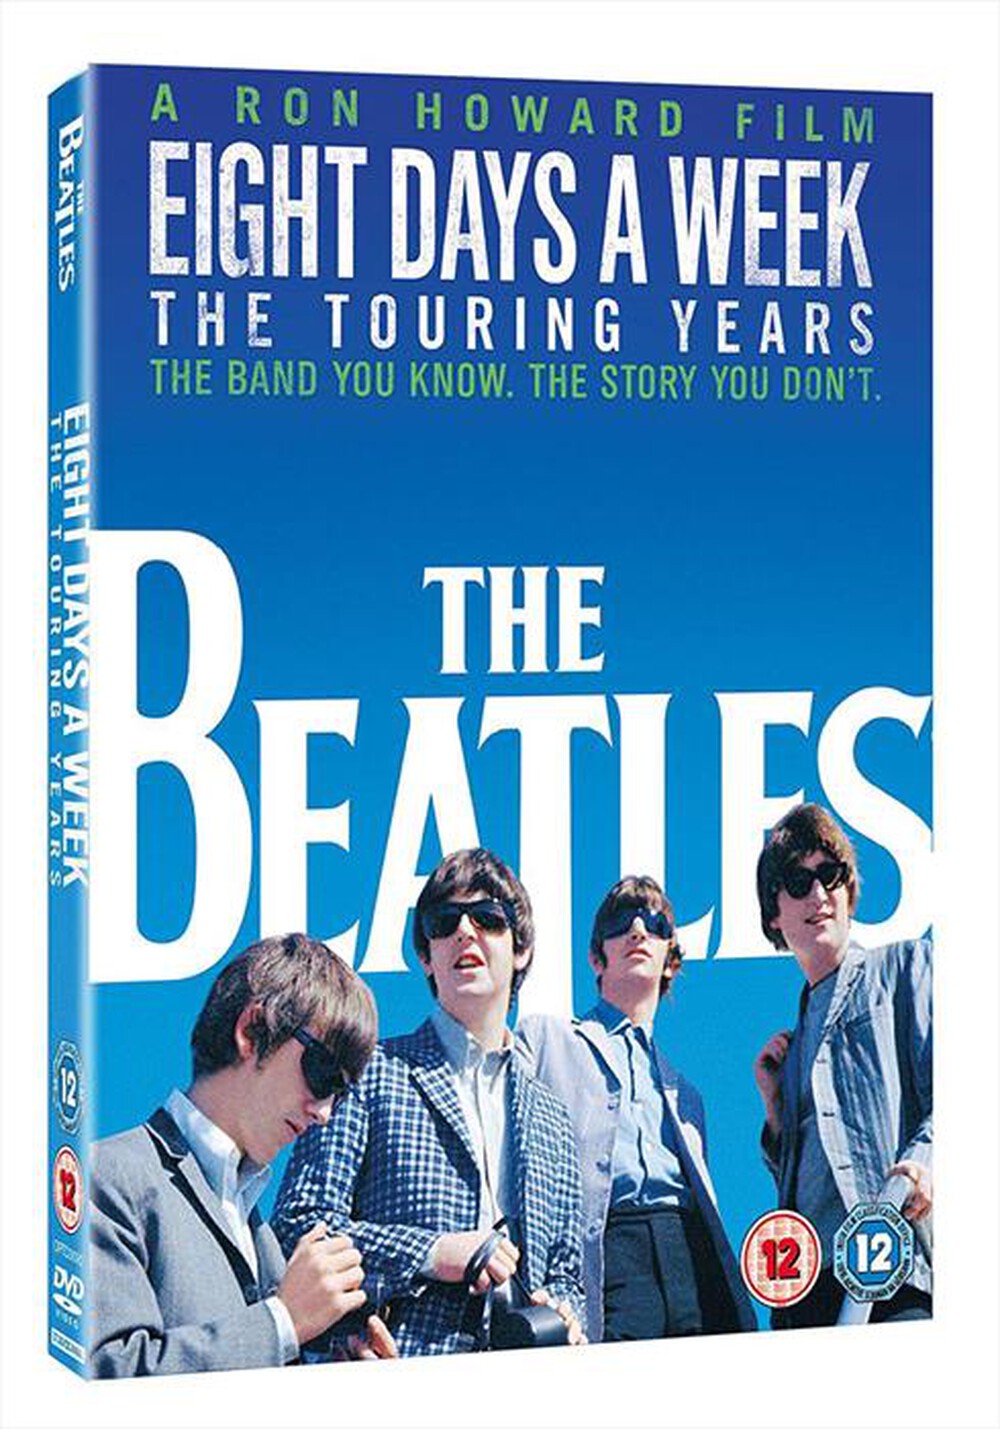 "WARNER HOME VIDEO - Beatles (The) - Eight Days A Week"